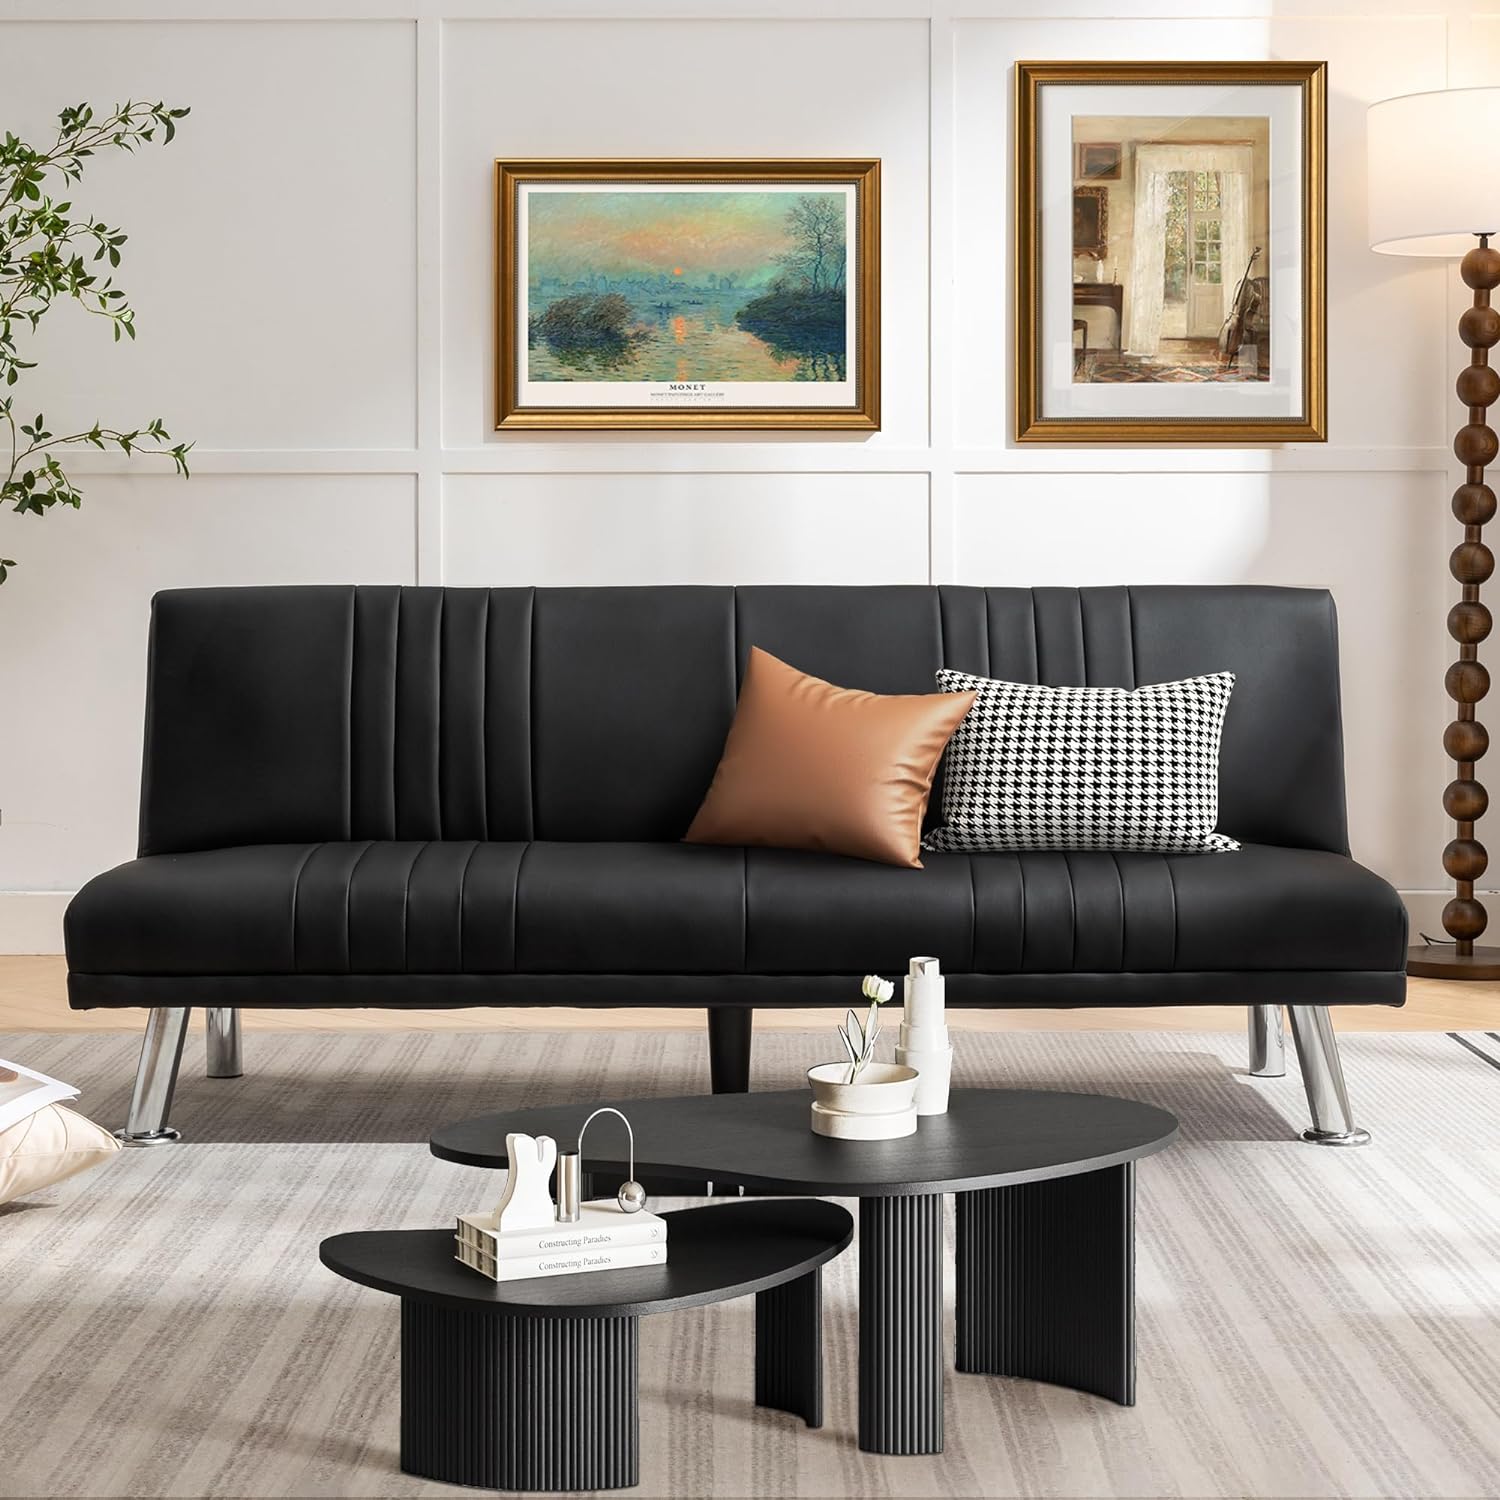 VECELO Modern Convertible Sofa Bed/Folding Sleeper Couch